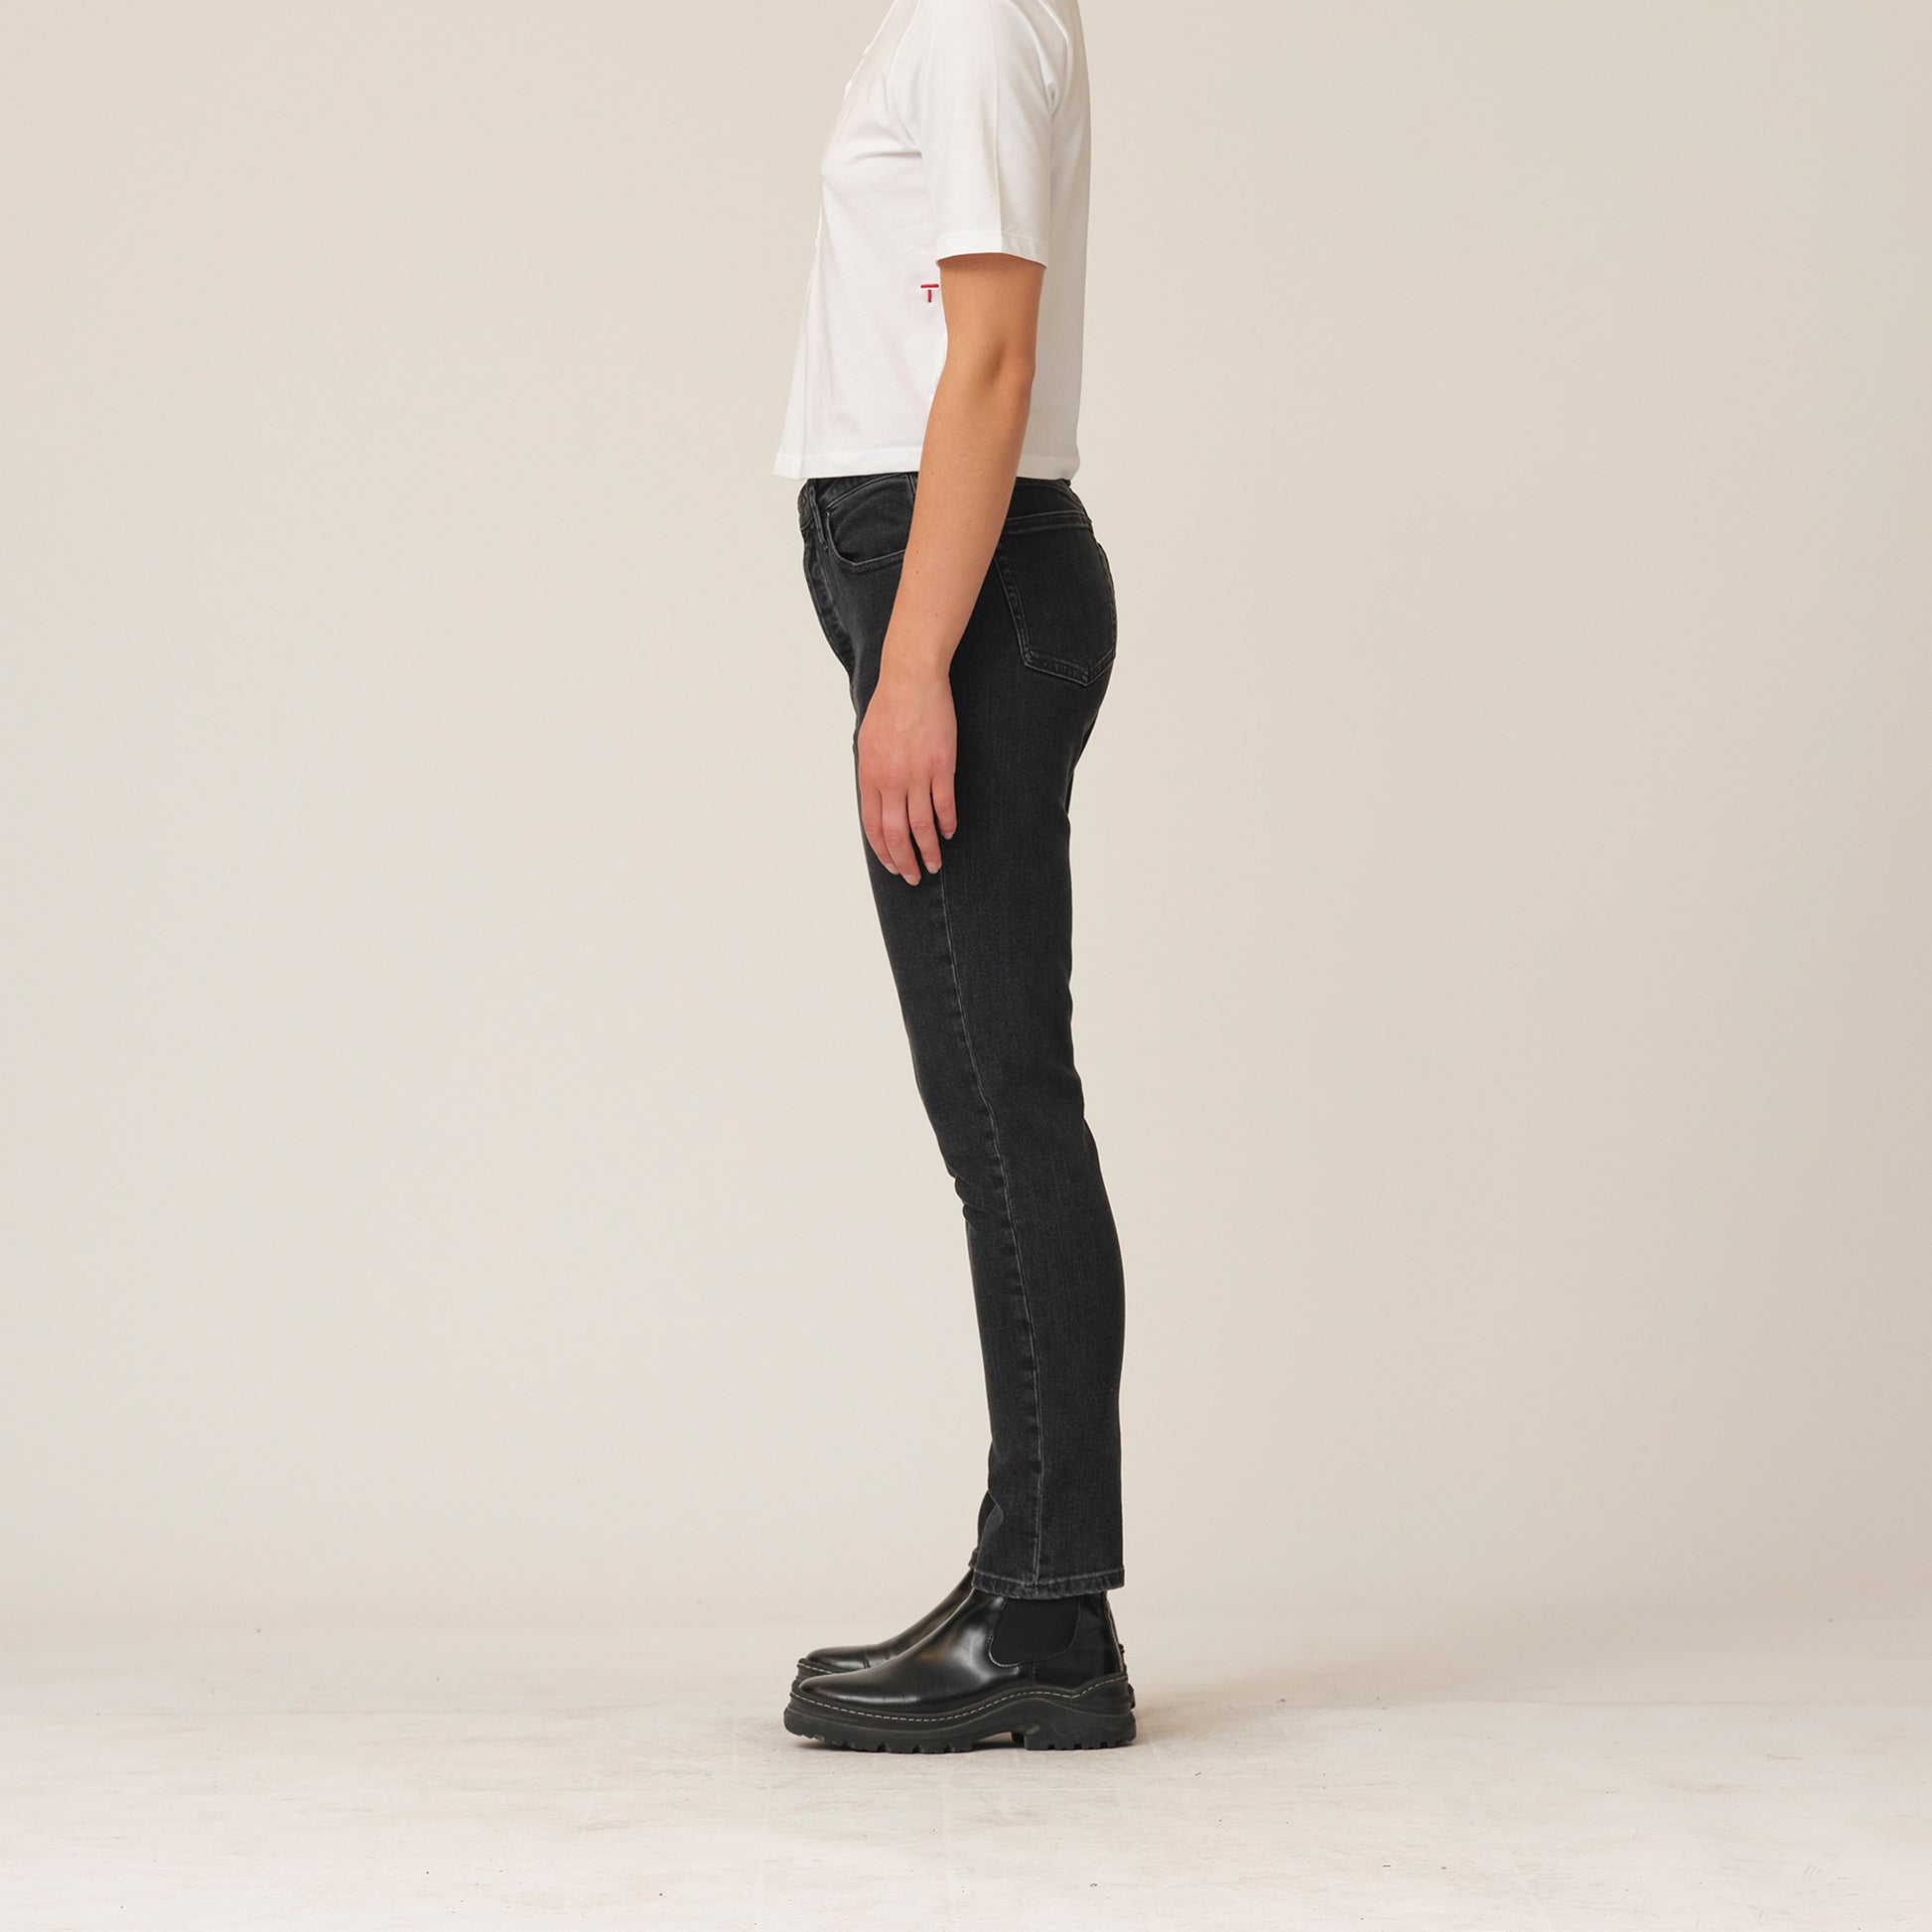 A woman wearing Tomorrow Denim's Hepburn Slim Jeans - Original Black made from organic cotton denim fabric and a white t-shirt.